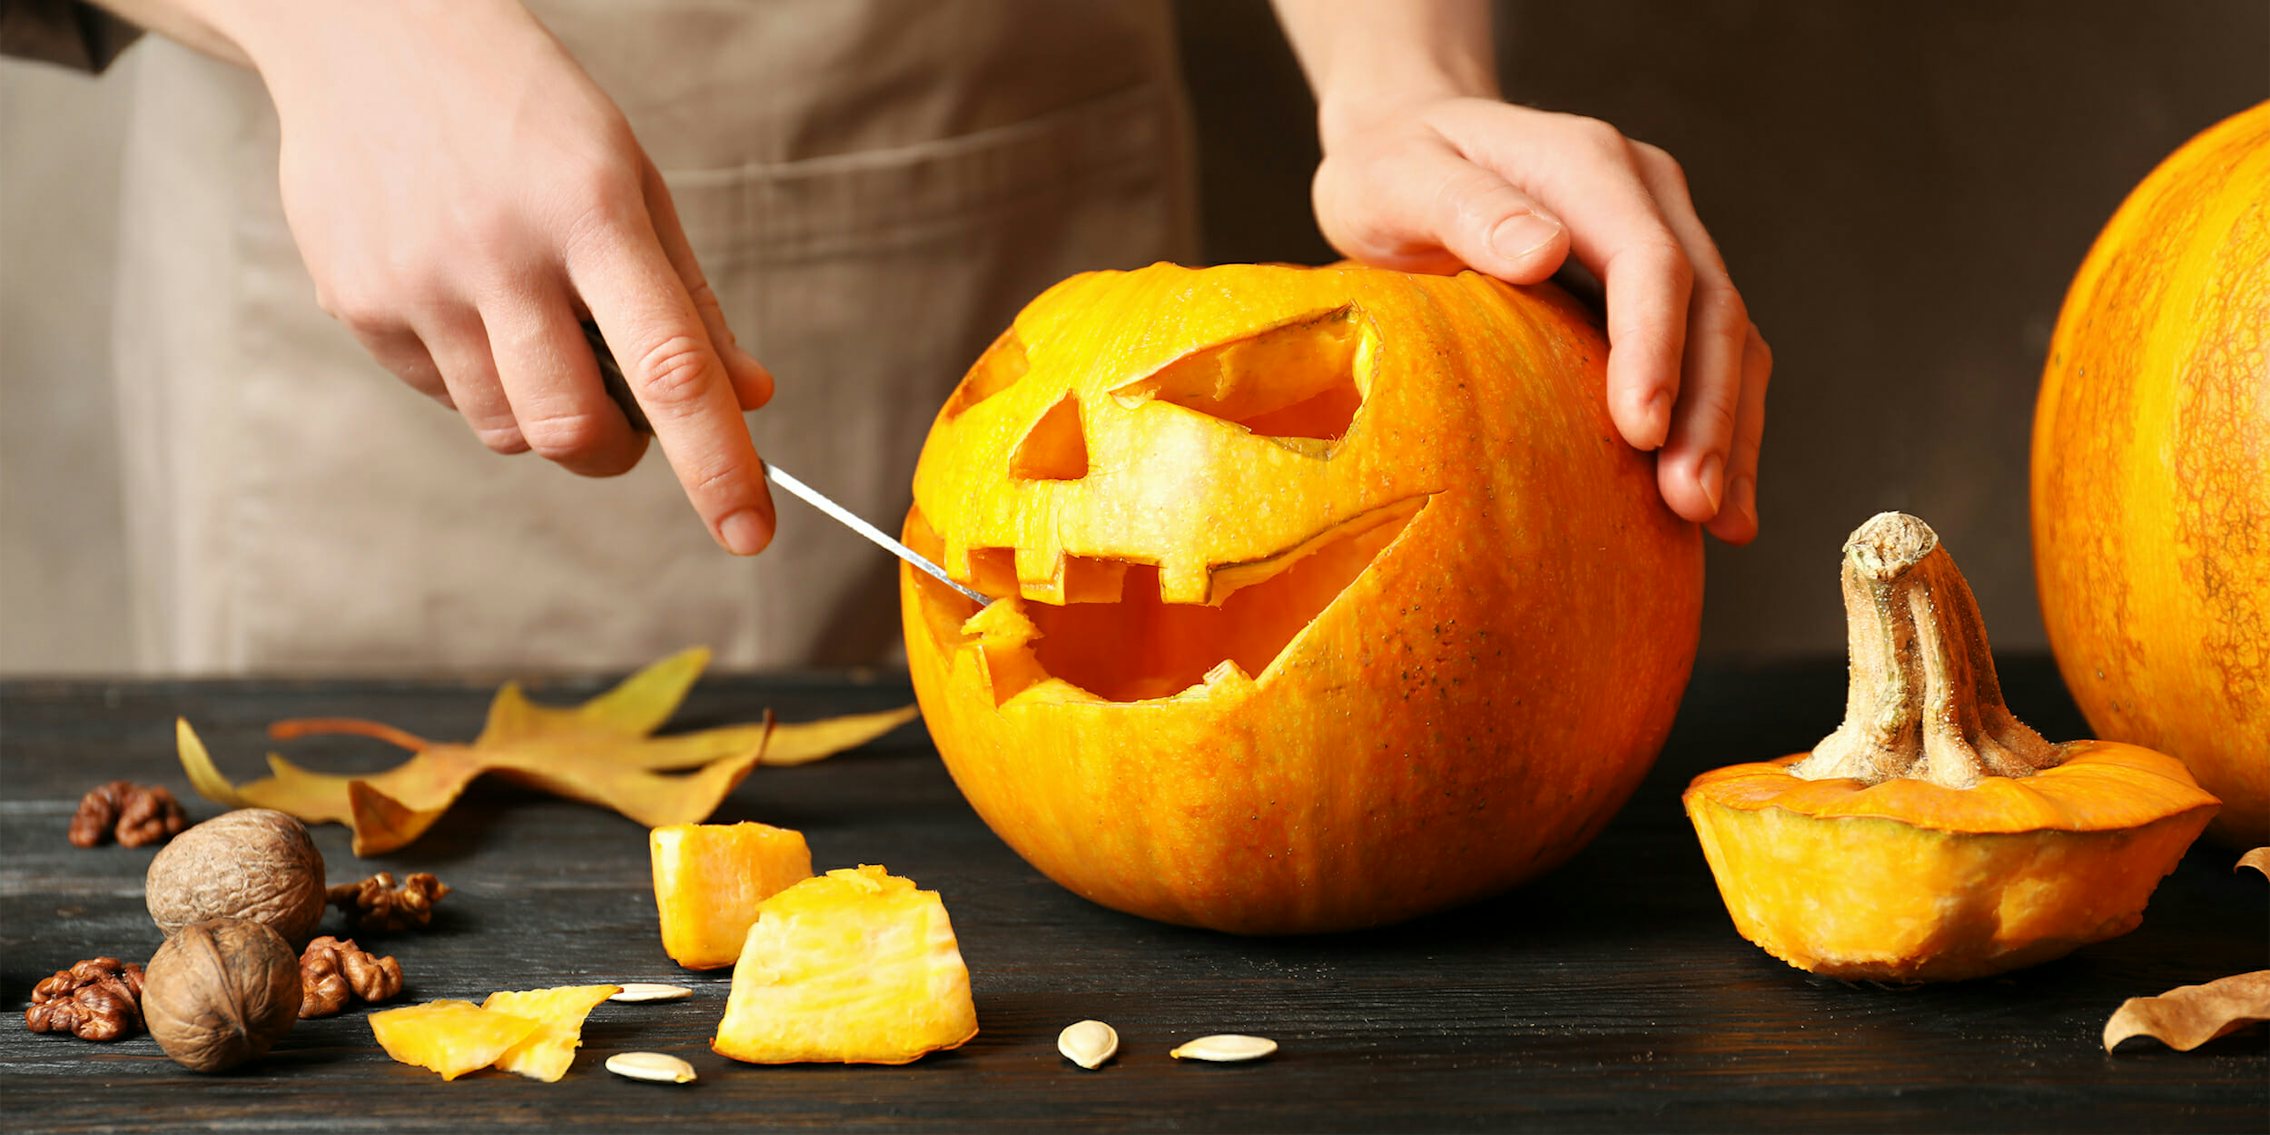 Pumpkin Carving ASMR Videos Provide Relaxing Fall Content